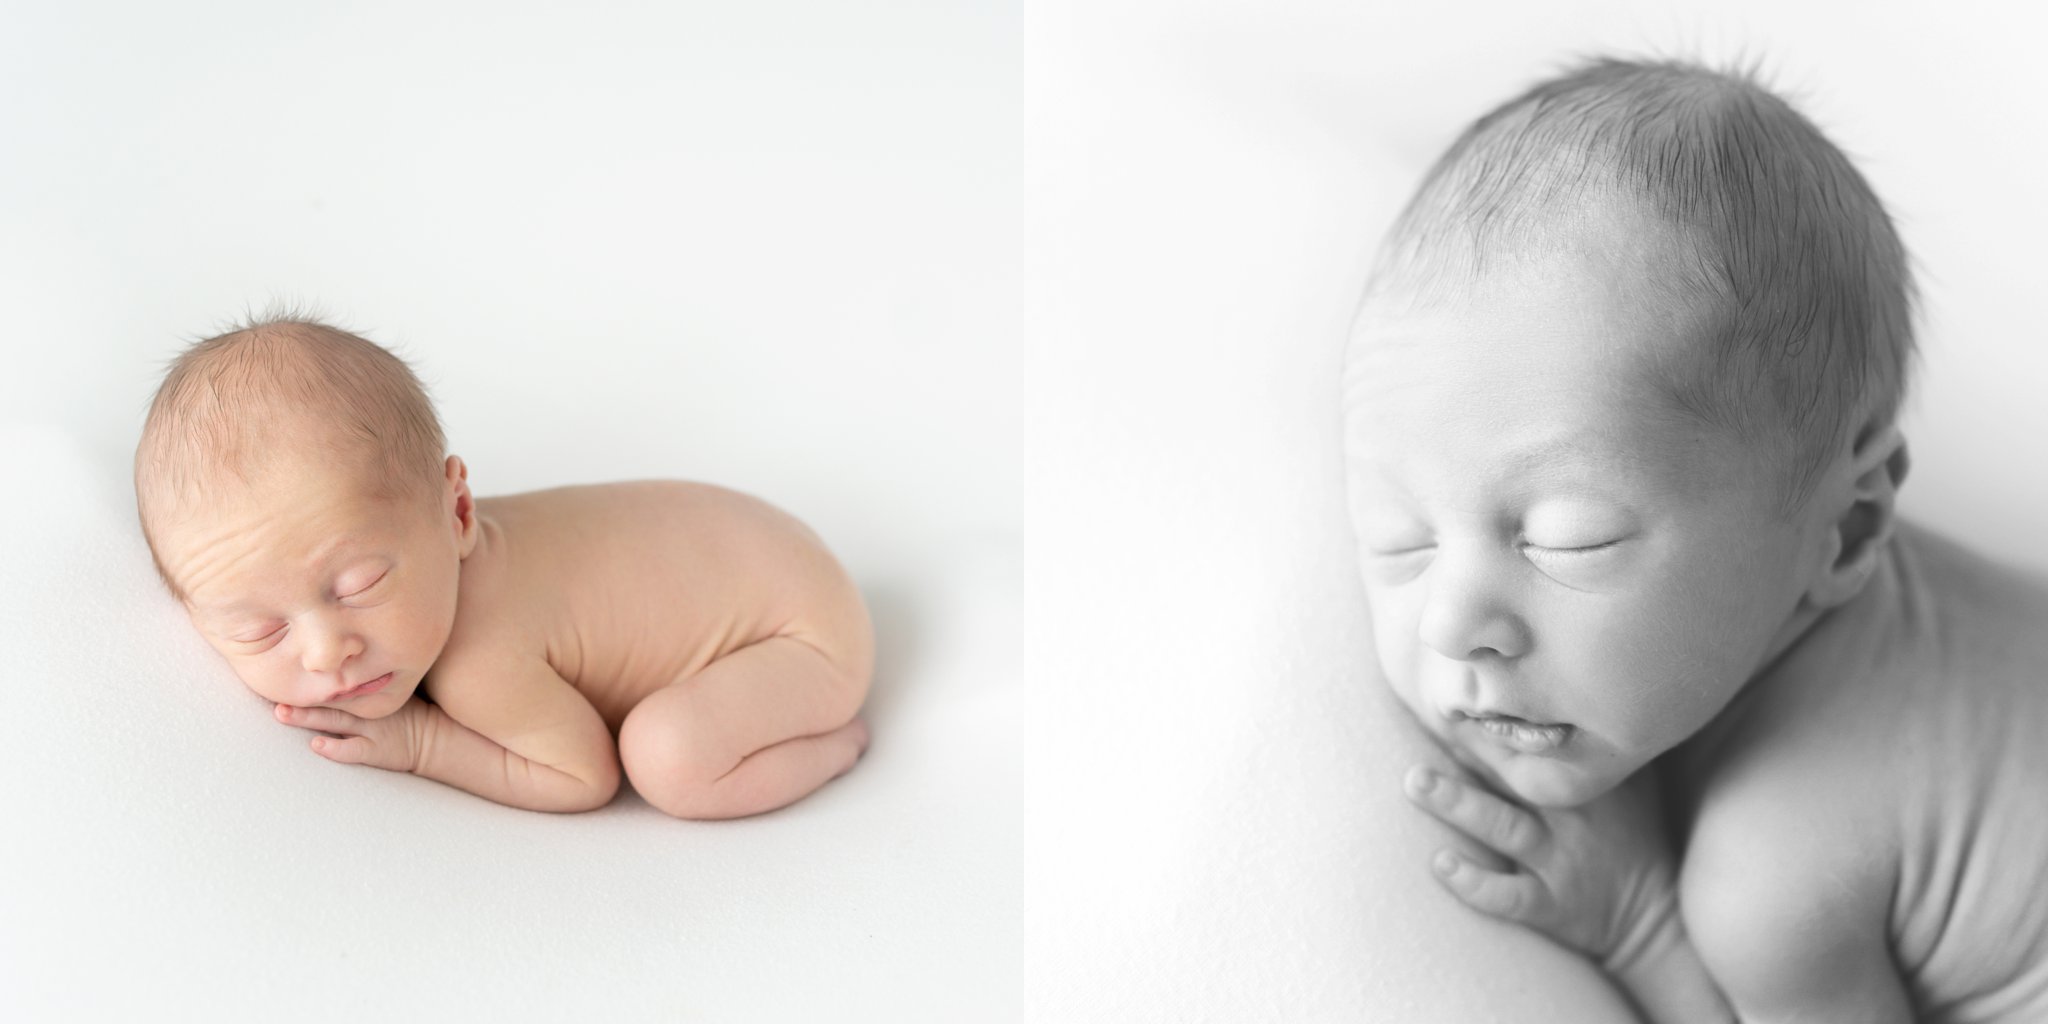 Newborn baby wearing angel wings being photographed in Jupiter photo studio.